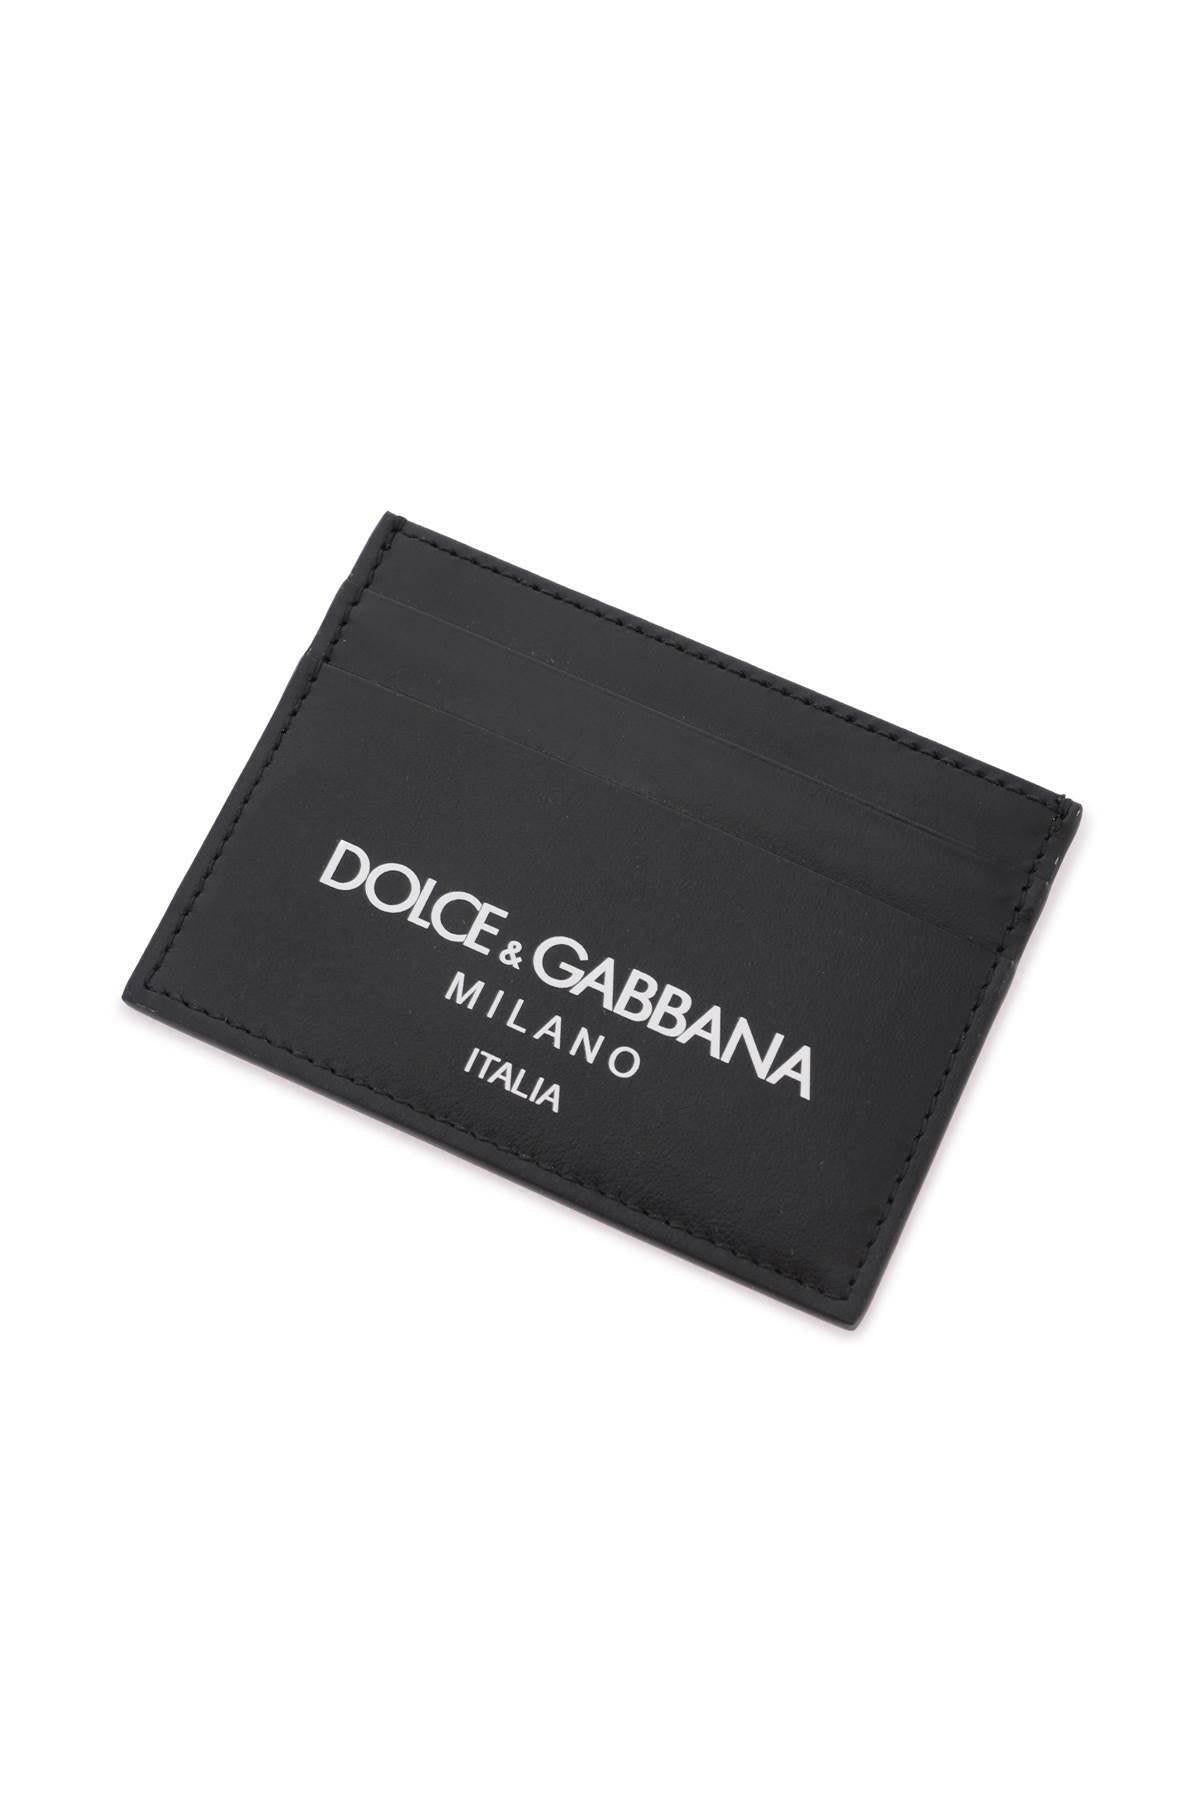 Dolce & Gabbana Logo Leather Cardholder